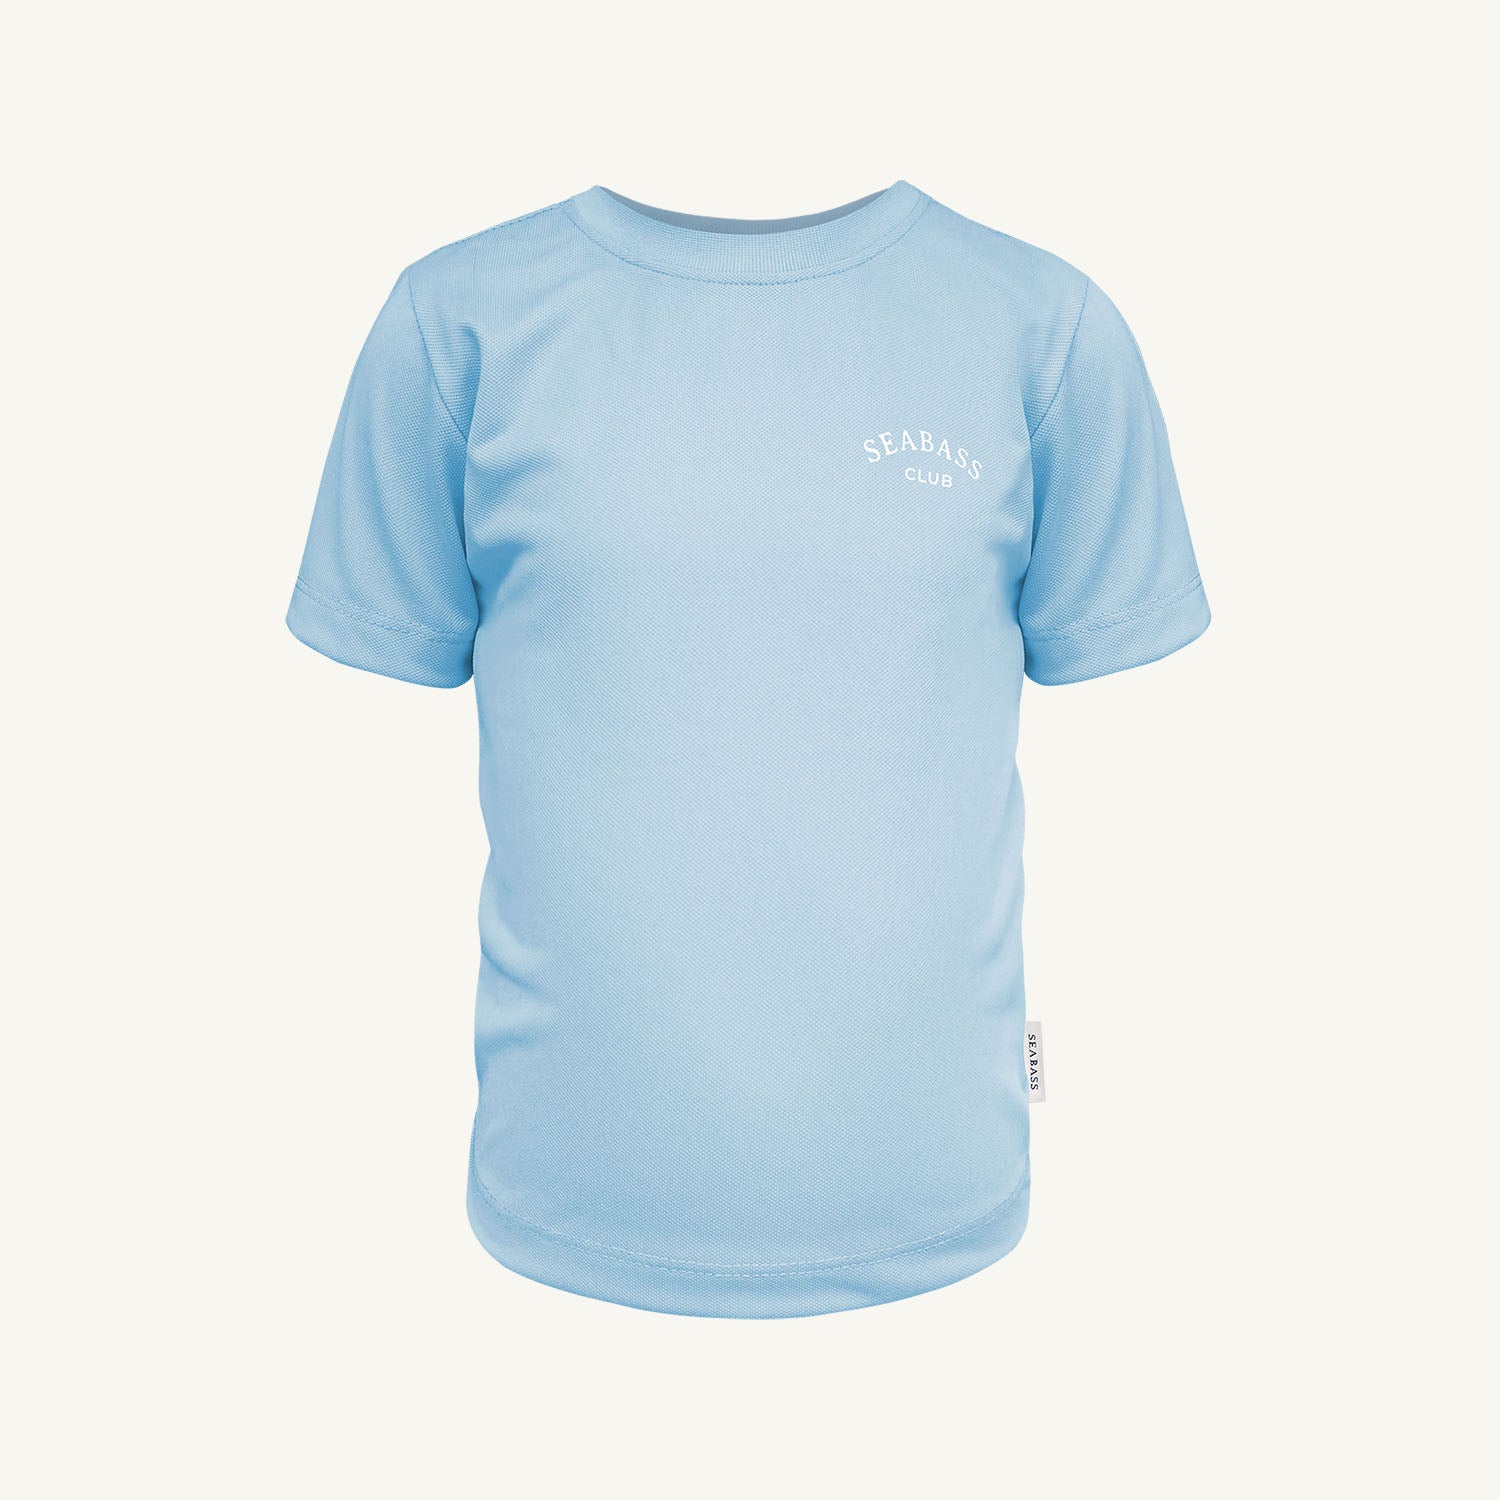 Boys UV Shirts & T-shirts, UV Protection UPF 50+